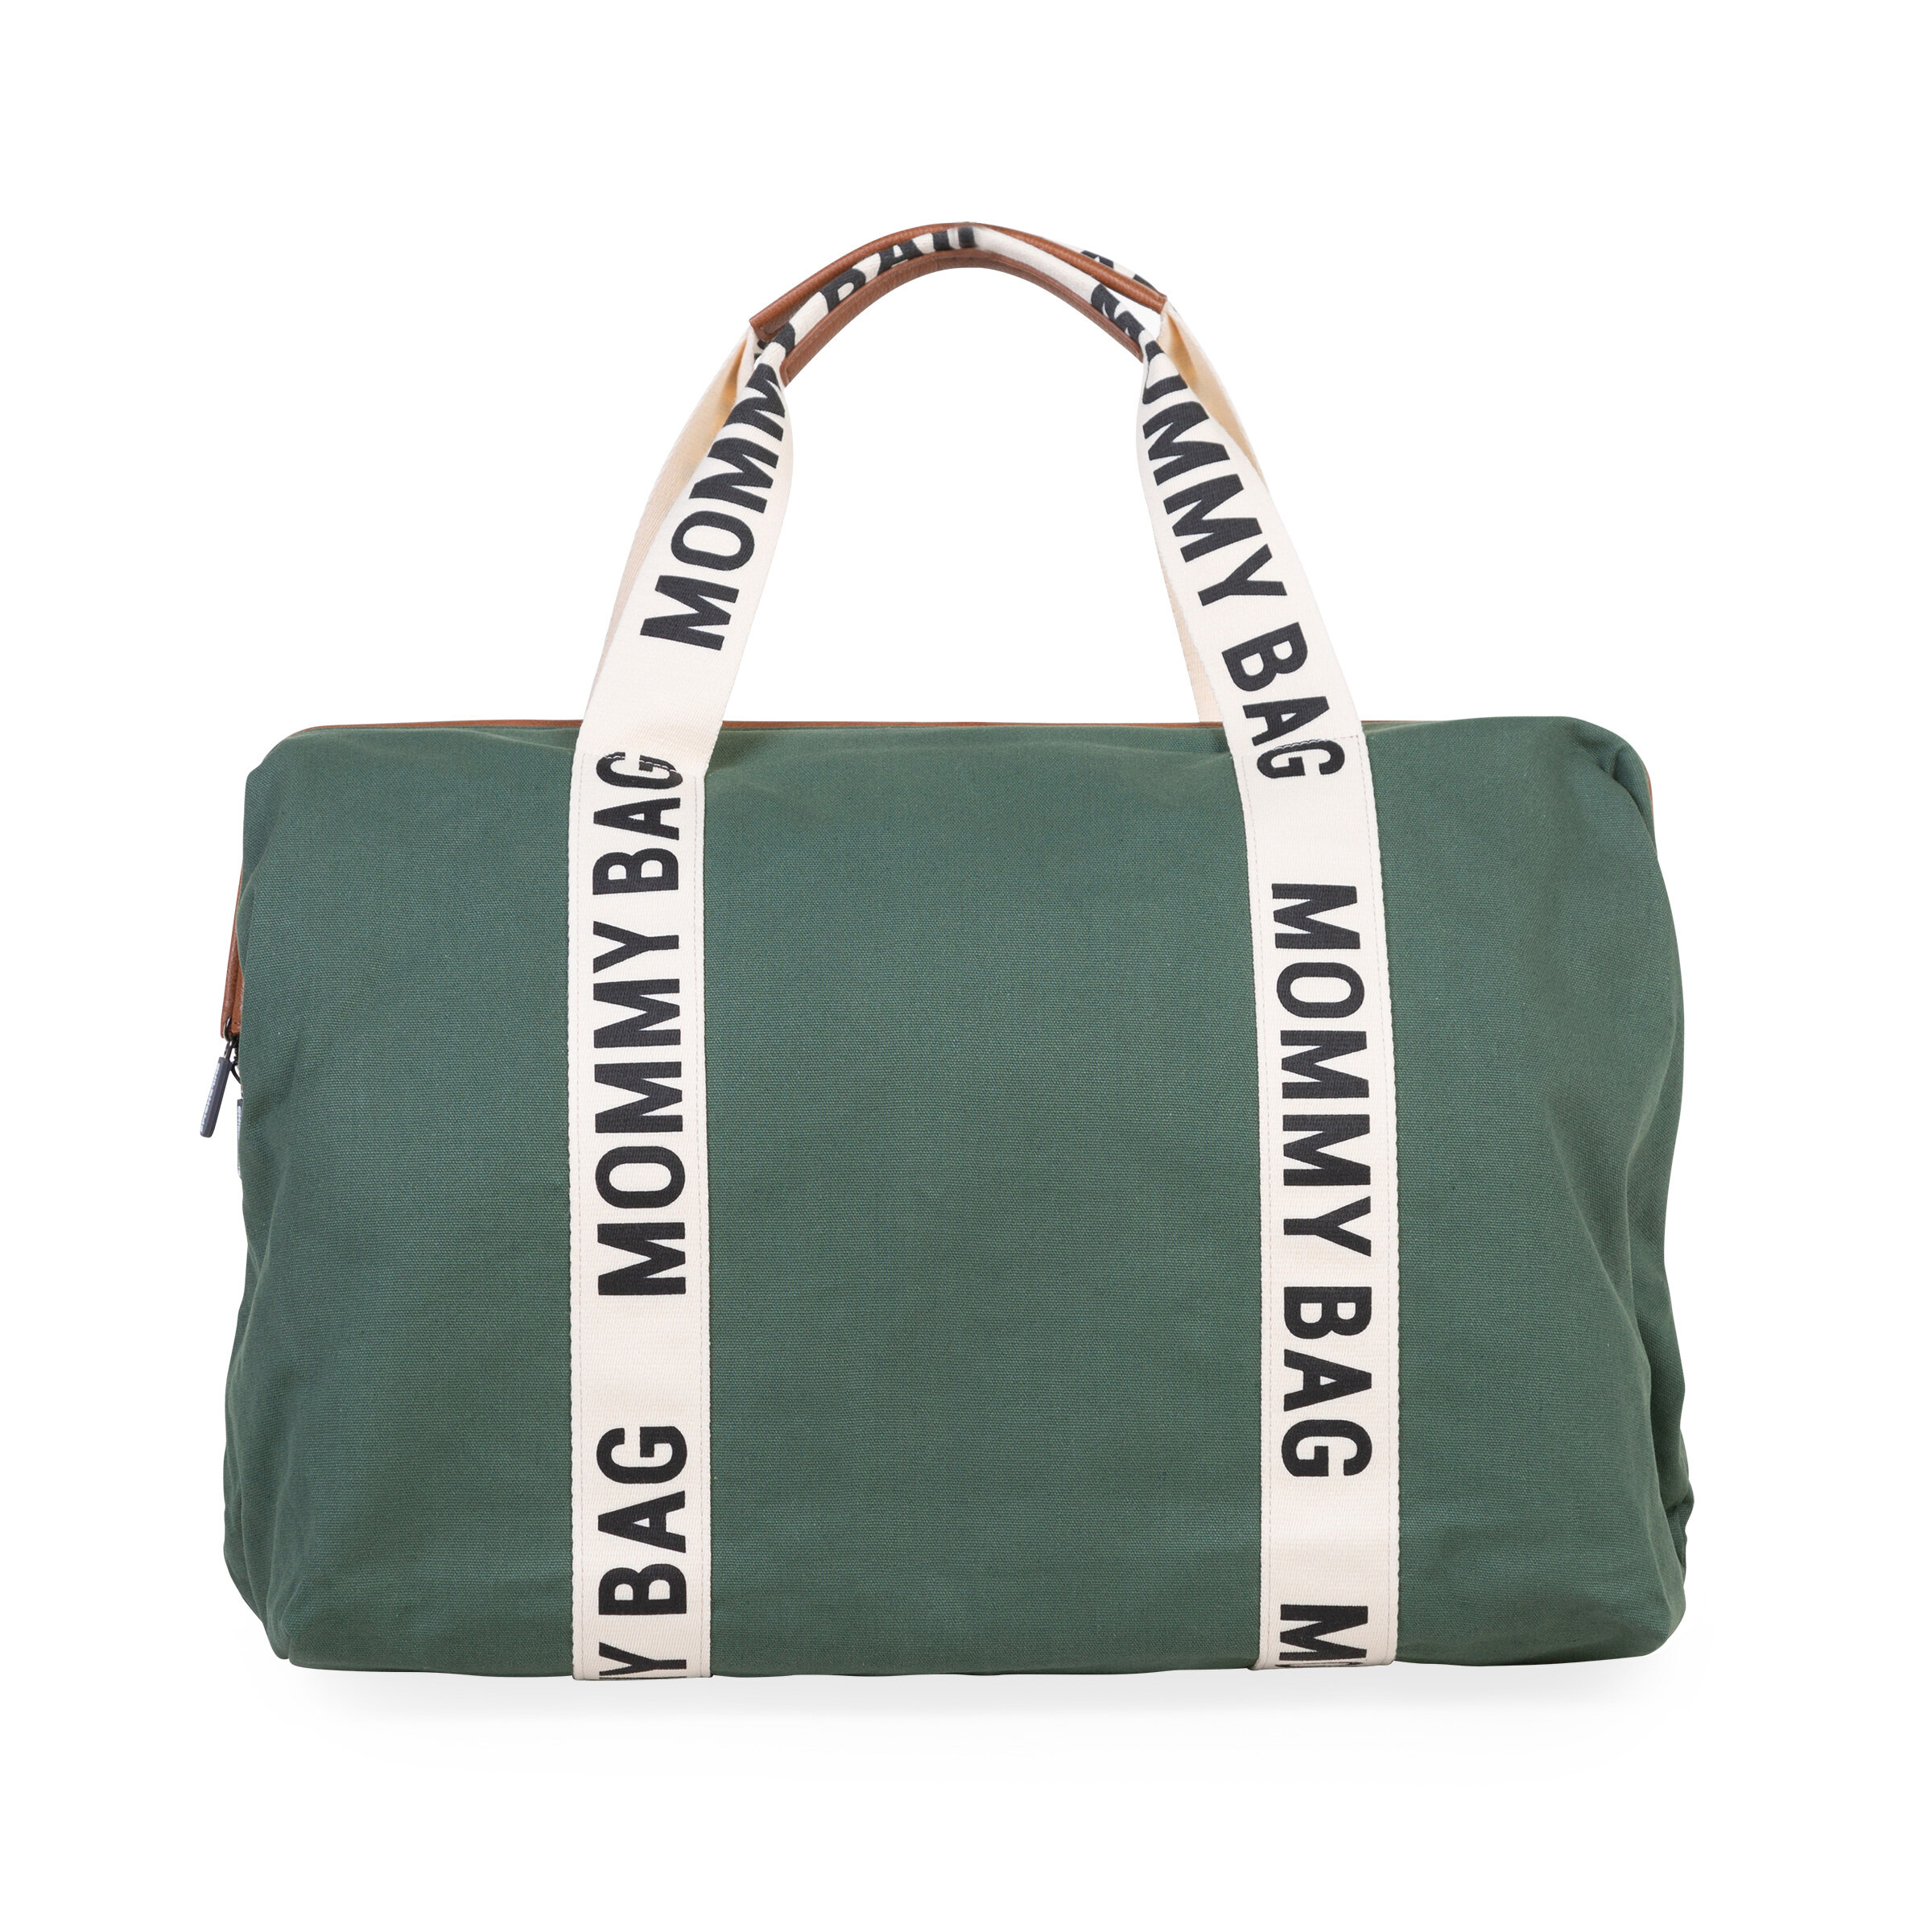 Сумка для коляски Childhome mommy bag can green сумка для коляски для мамы elodie changing bag quilted pebble green